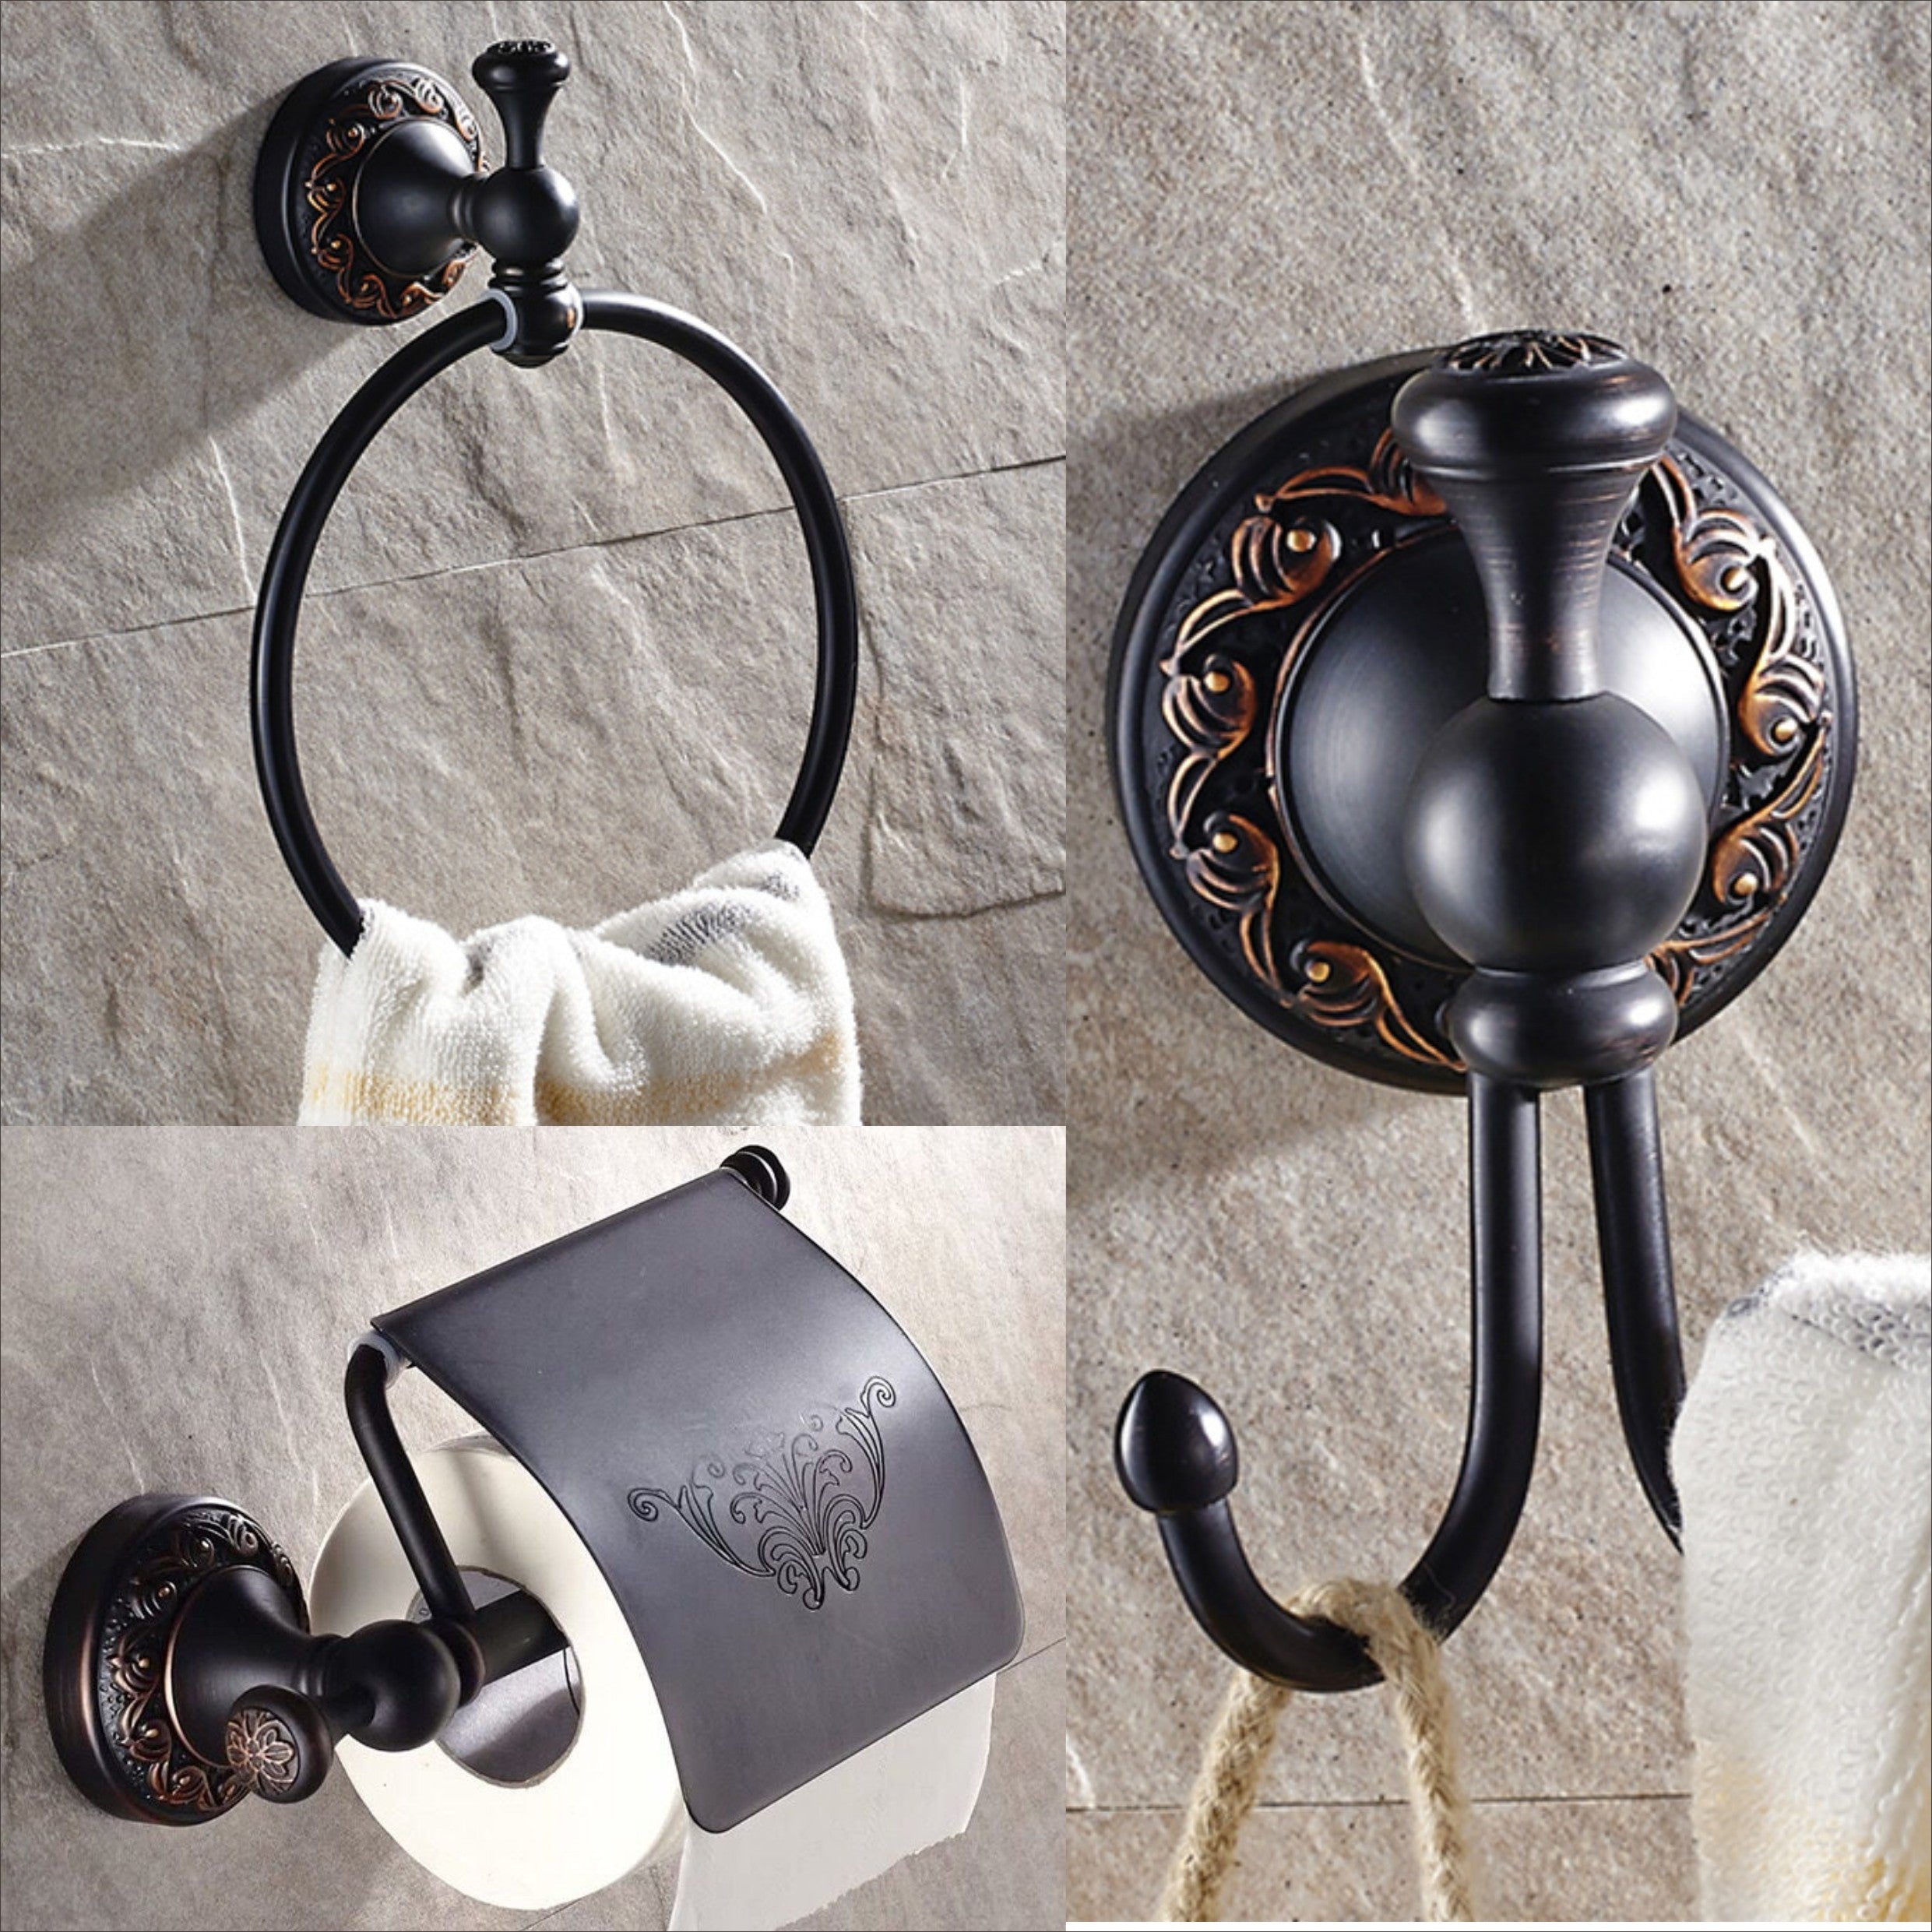 Oil Rubbed Bronze Bathroom Accessories Set,Robe hook,Paper Holder